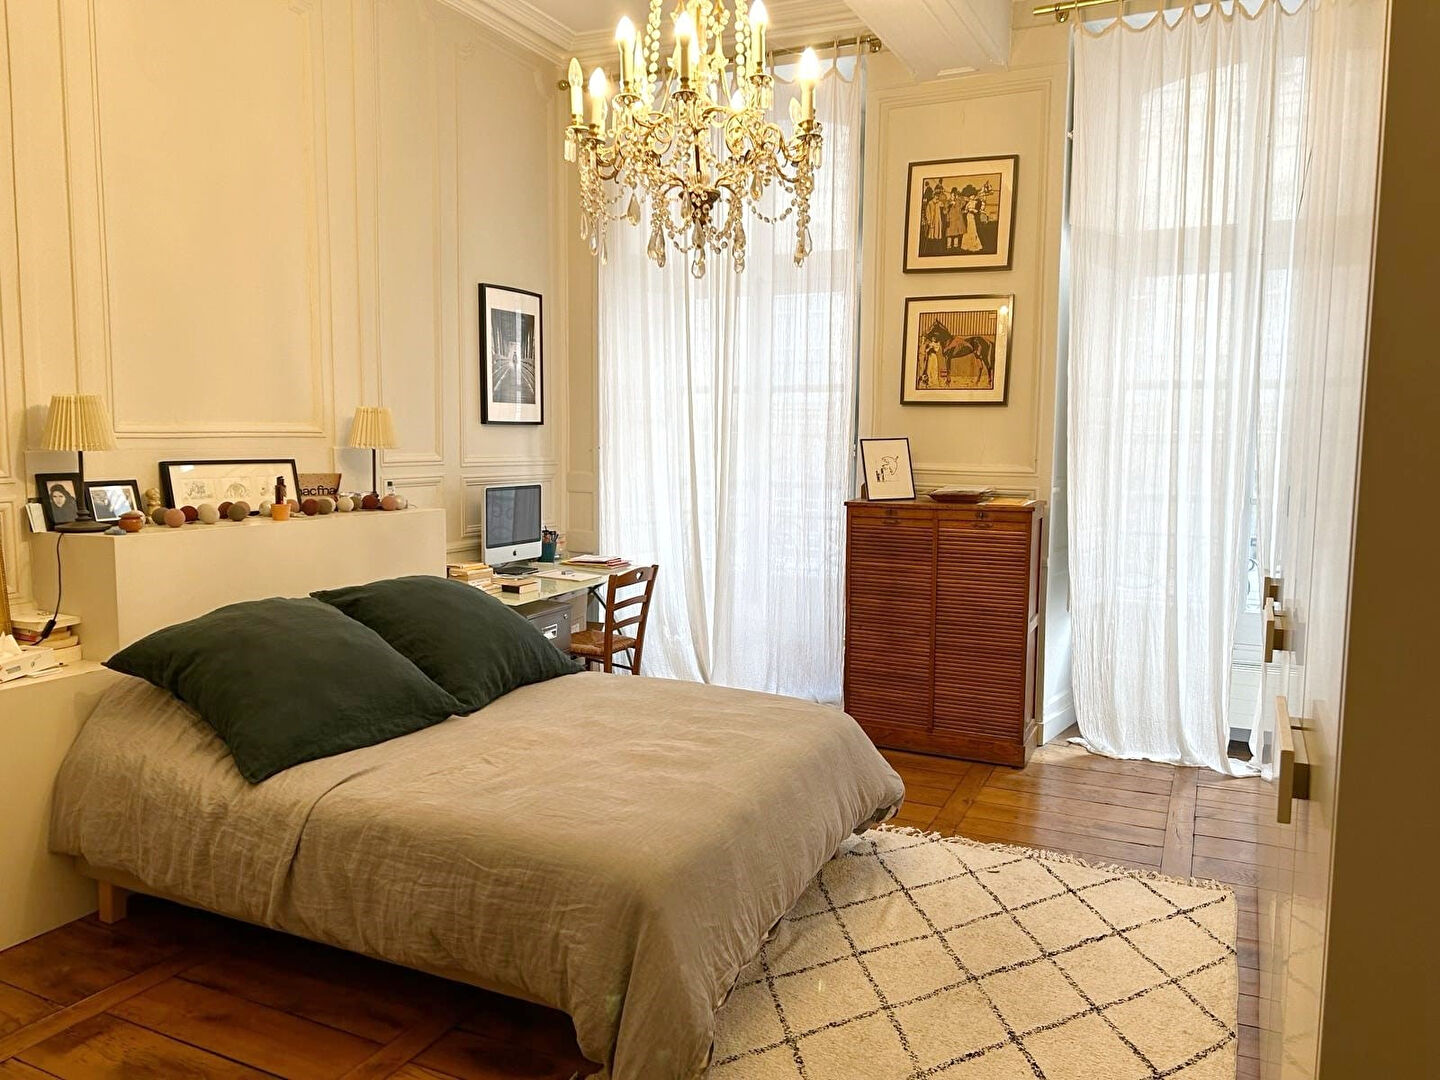 Appartement 5 pièces - 140 m² environ - 55062148e.jpg | Kermarrec Habitation